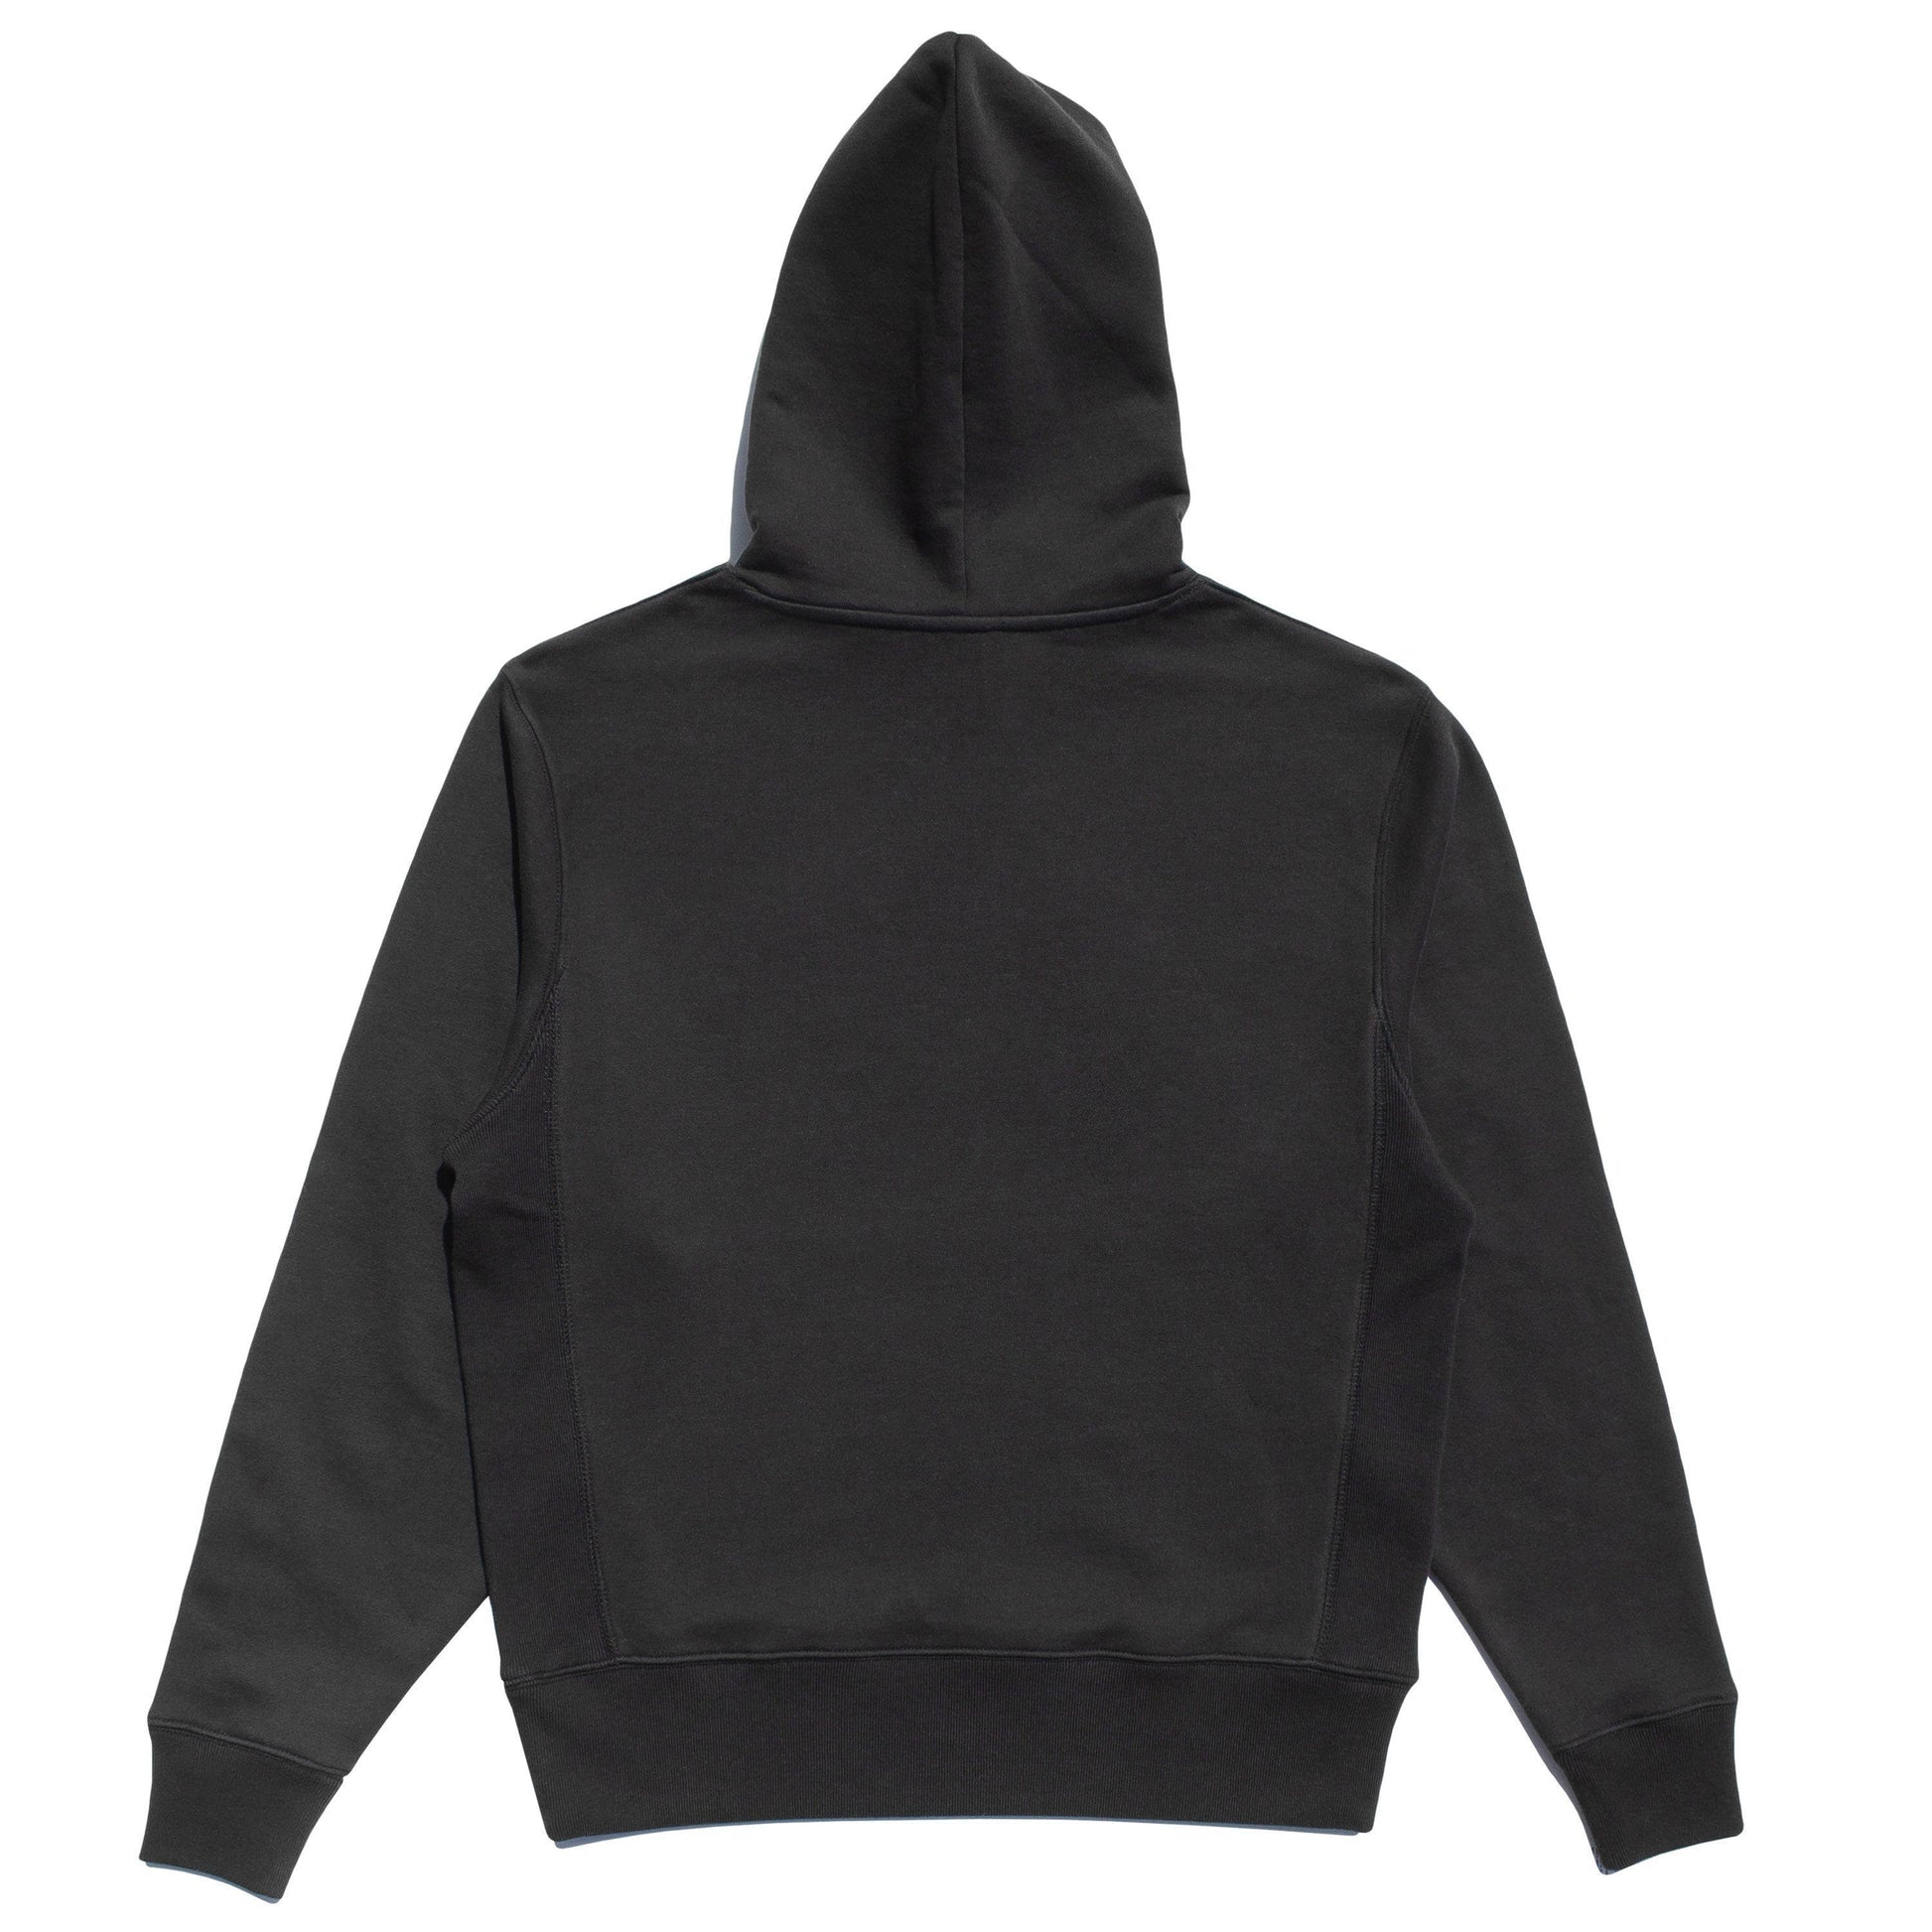 Super Soft Fleece Sweatshirt in Black XS - L